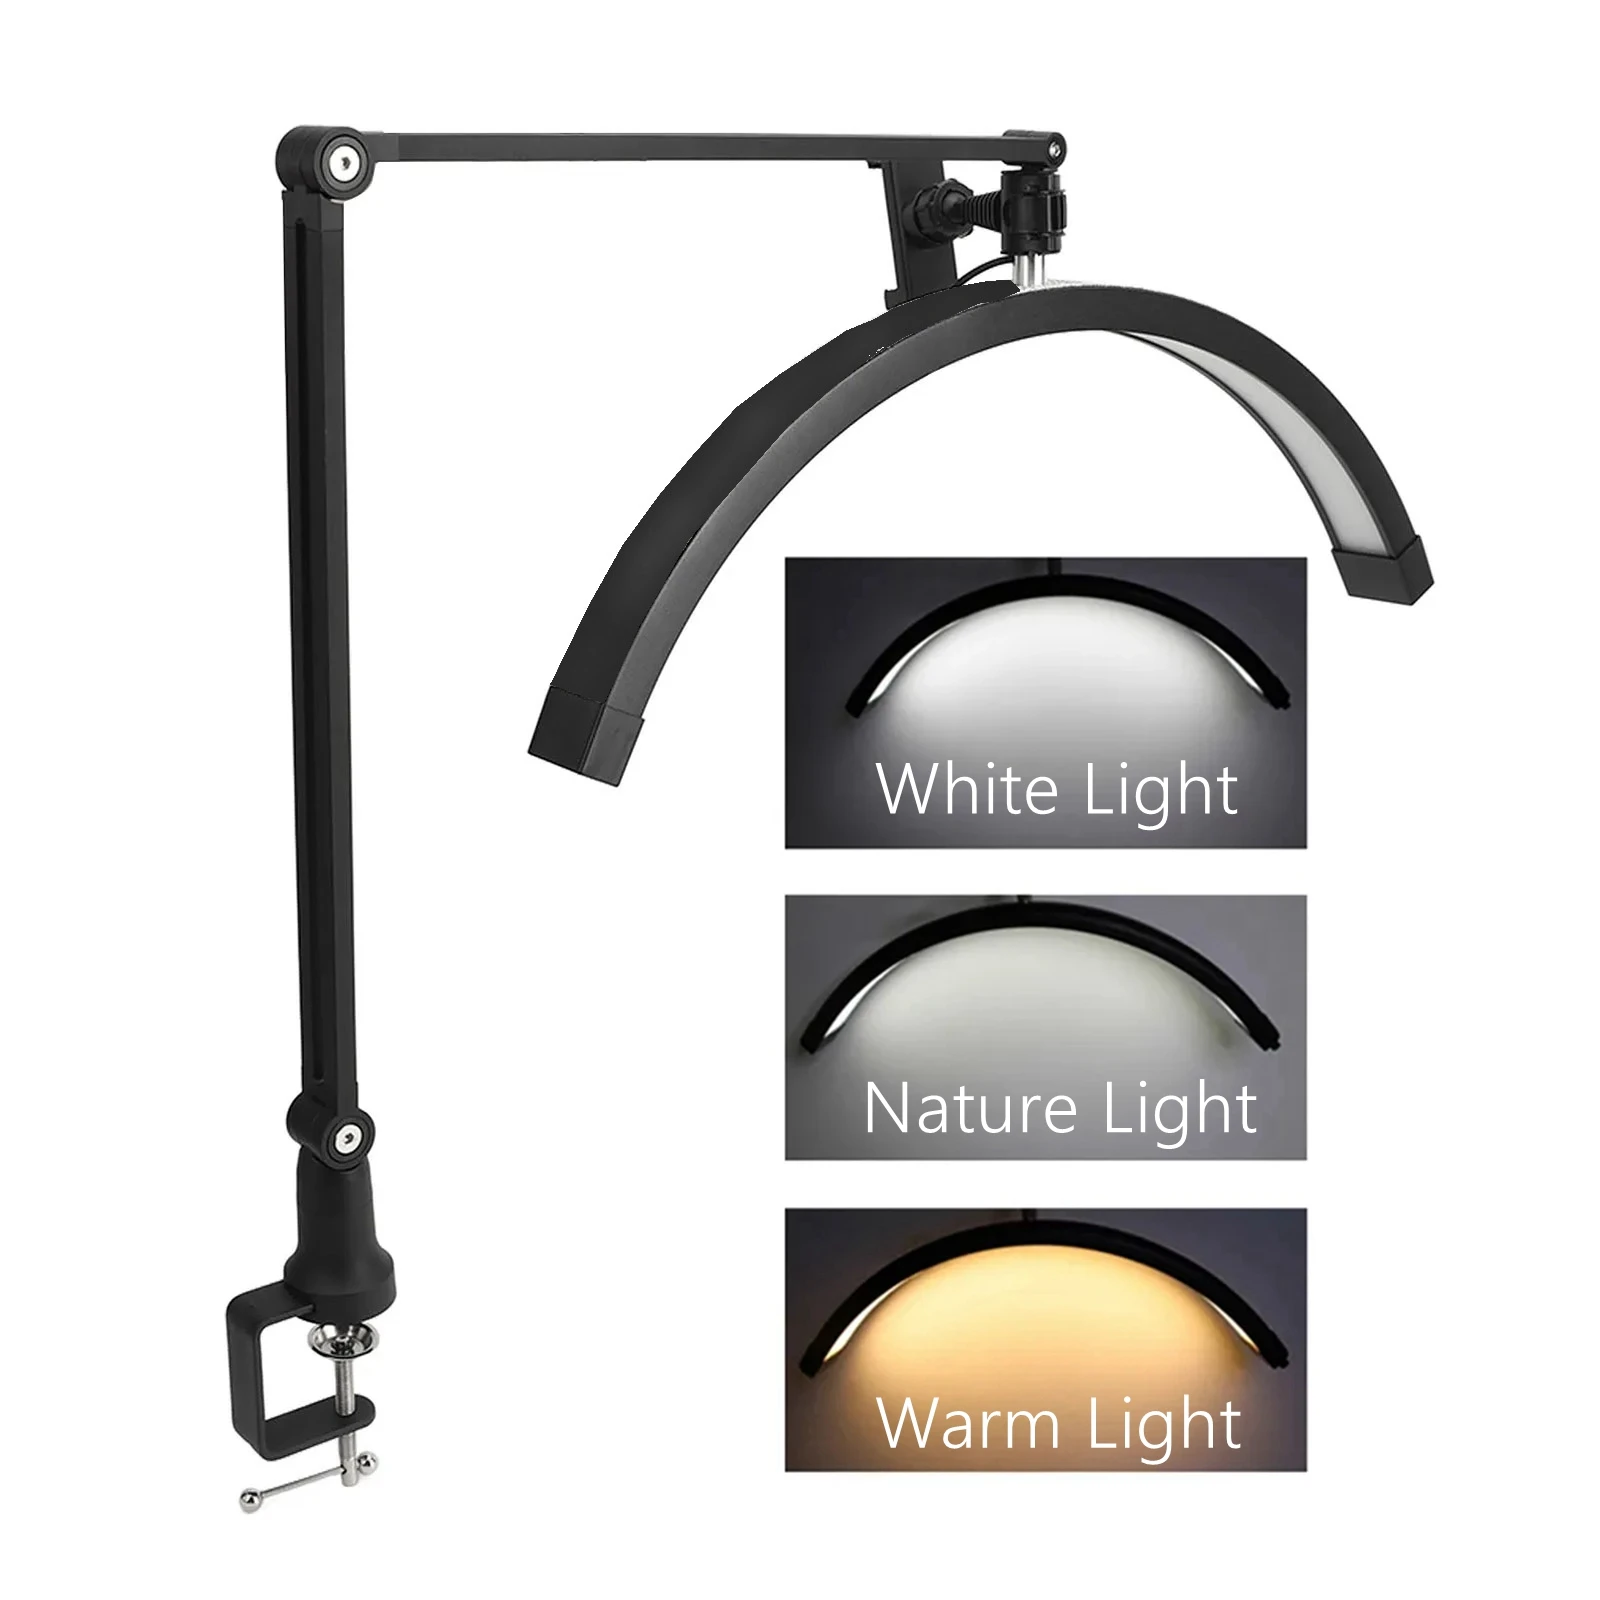 Existing Beauty Lash Light for Eyelash Tech - LED Half Moon Light - Adjustable Brightness, Warm to Cool Light - Esthetician Light for Lash Artists